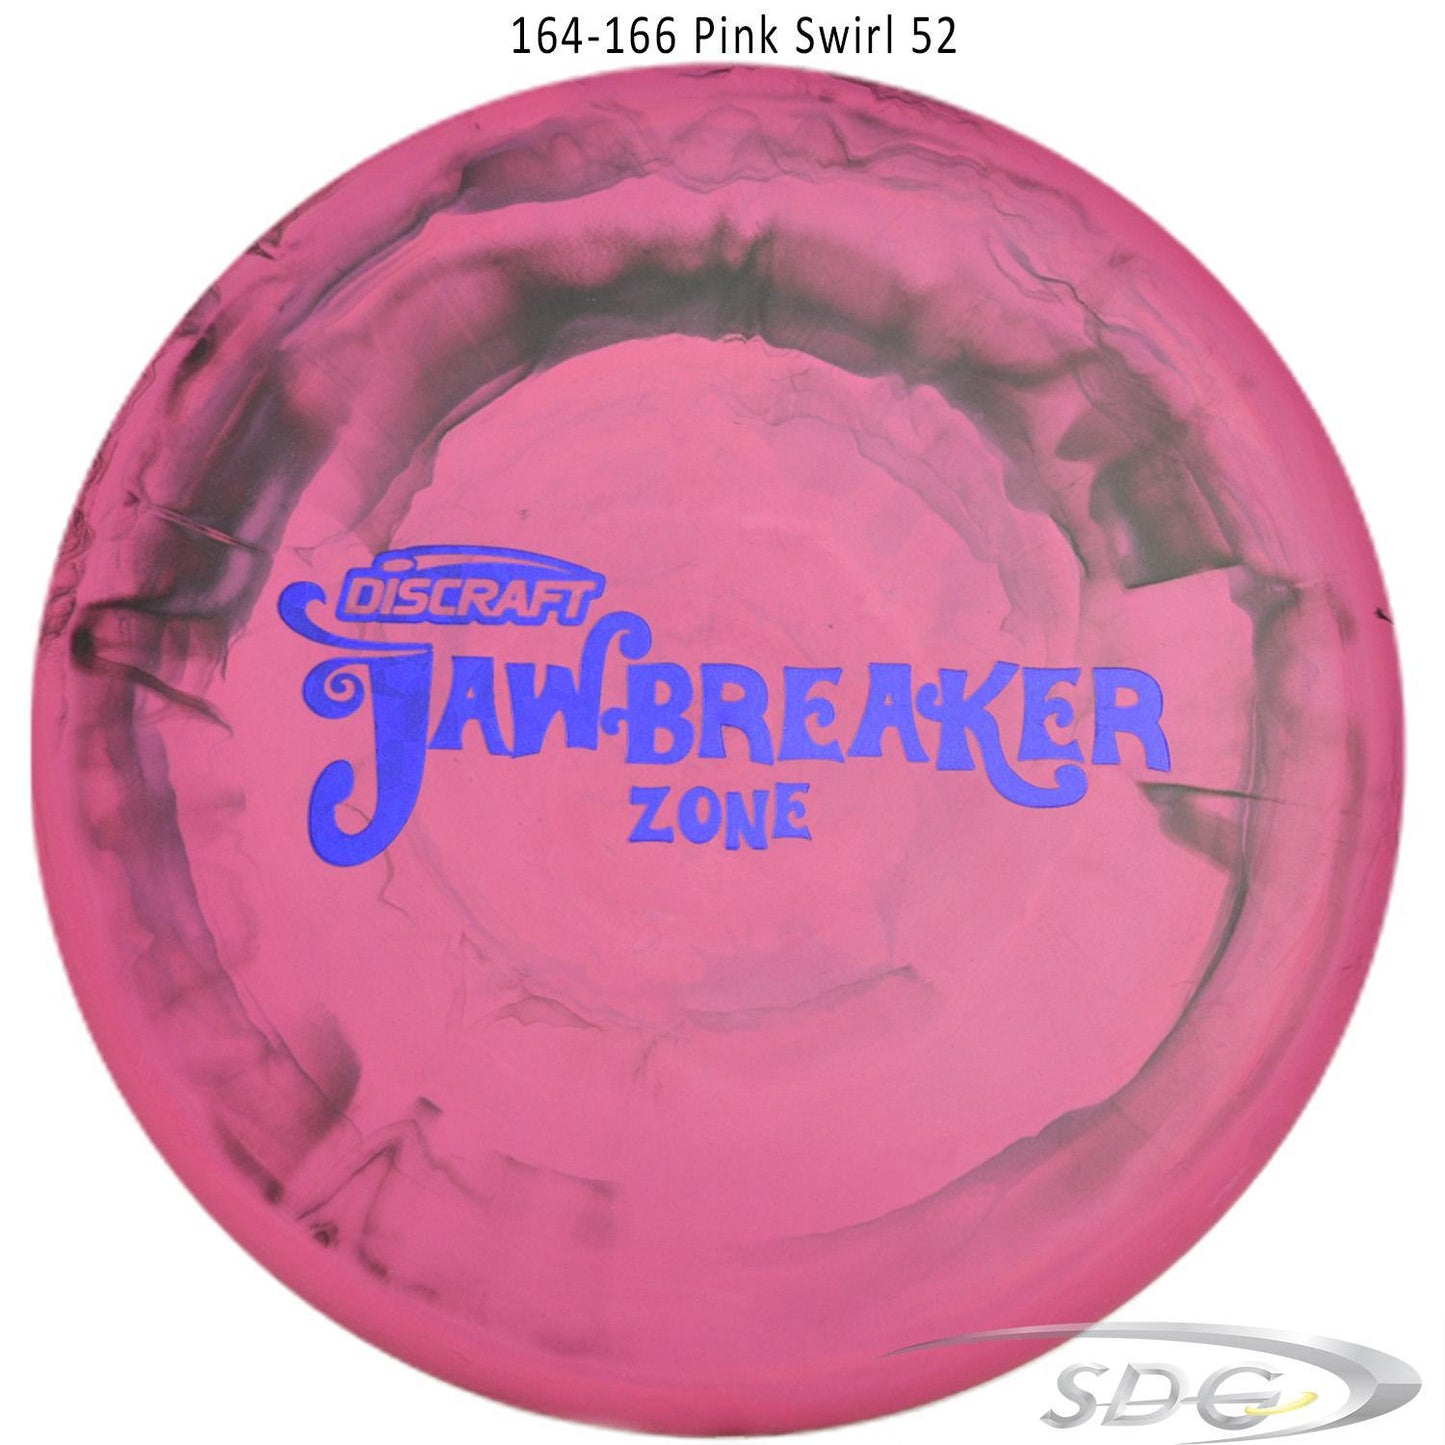 discraft-jawbreaker-zone-disc-golf-putter 164-166 Pink Swirl 52